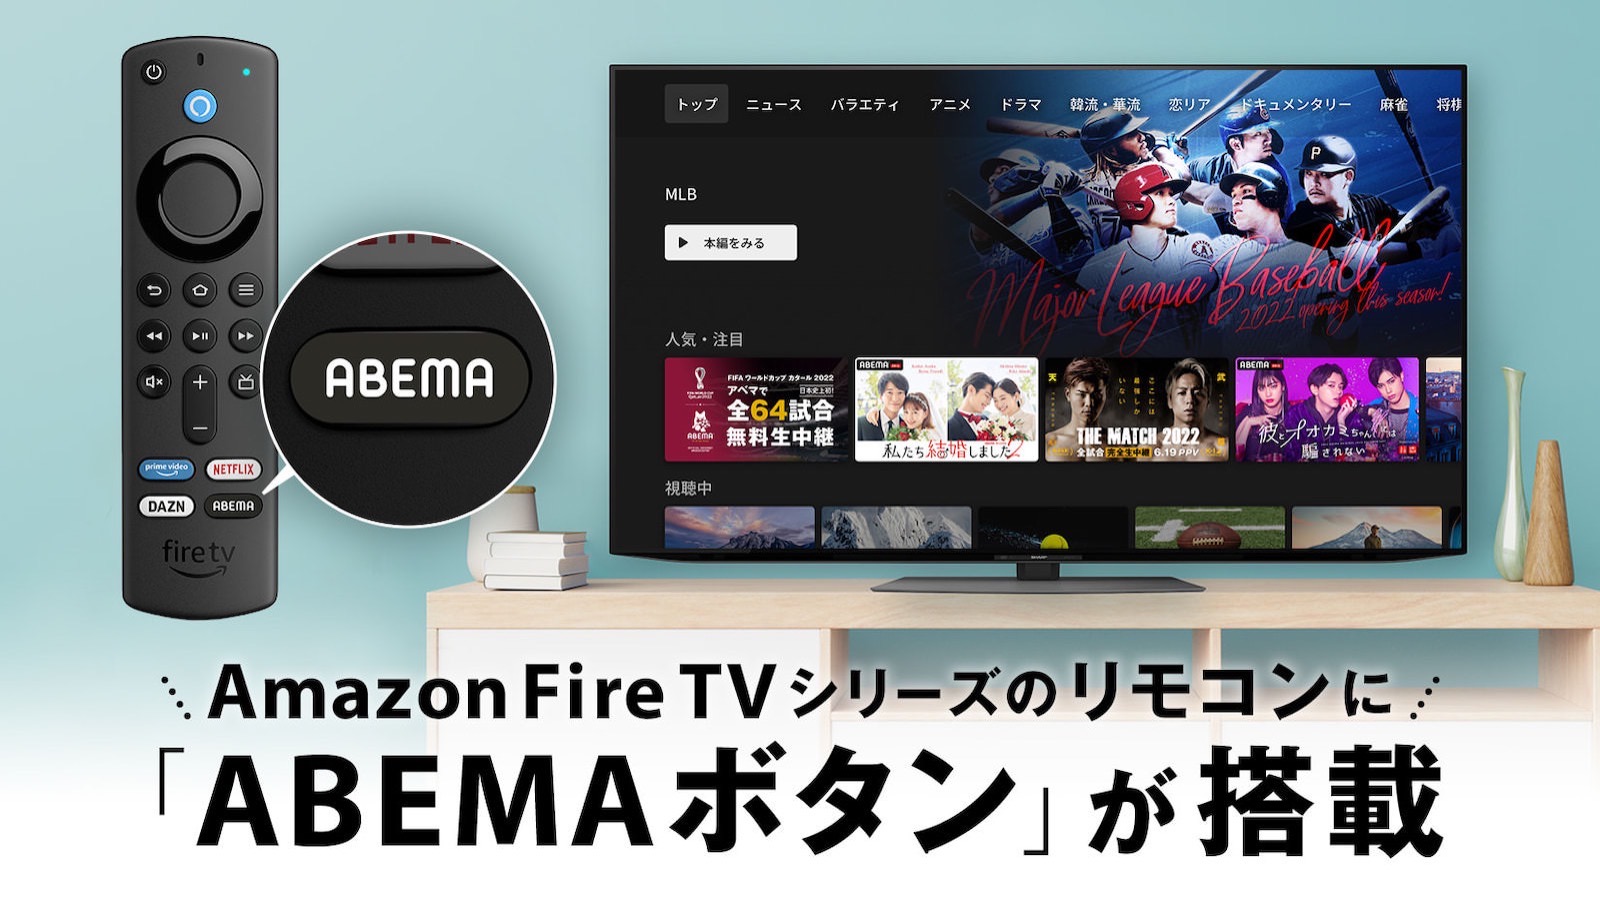 Amazon Fire TV Stick Abema Version